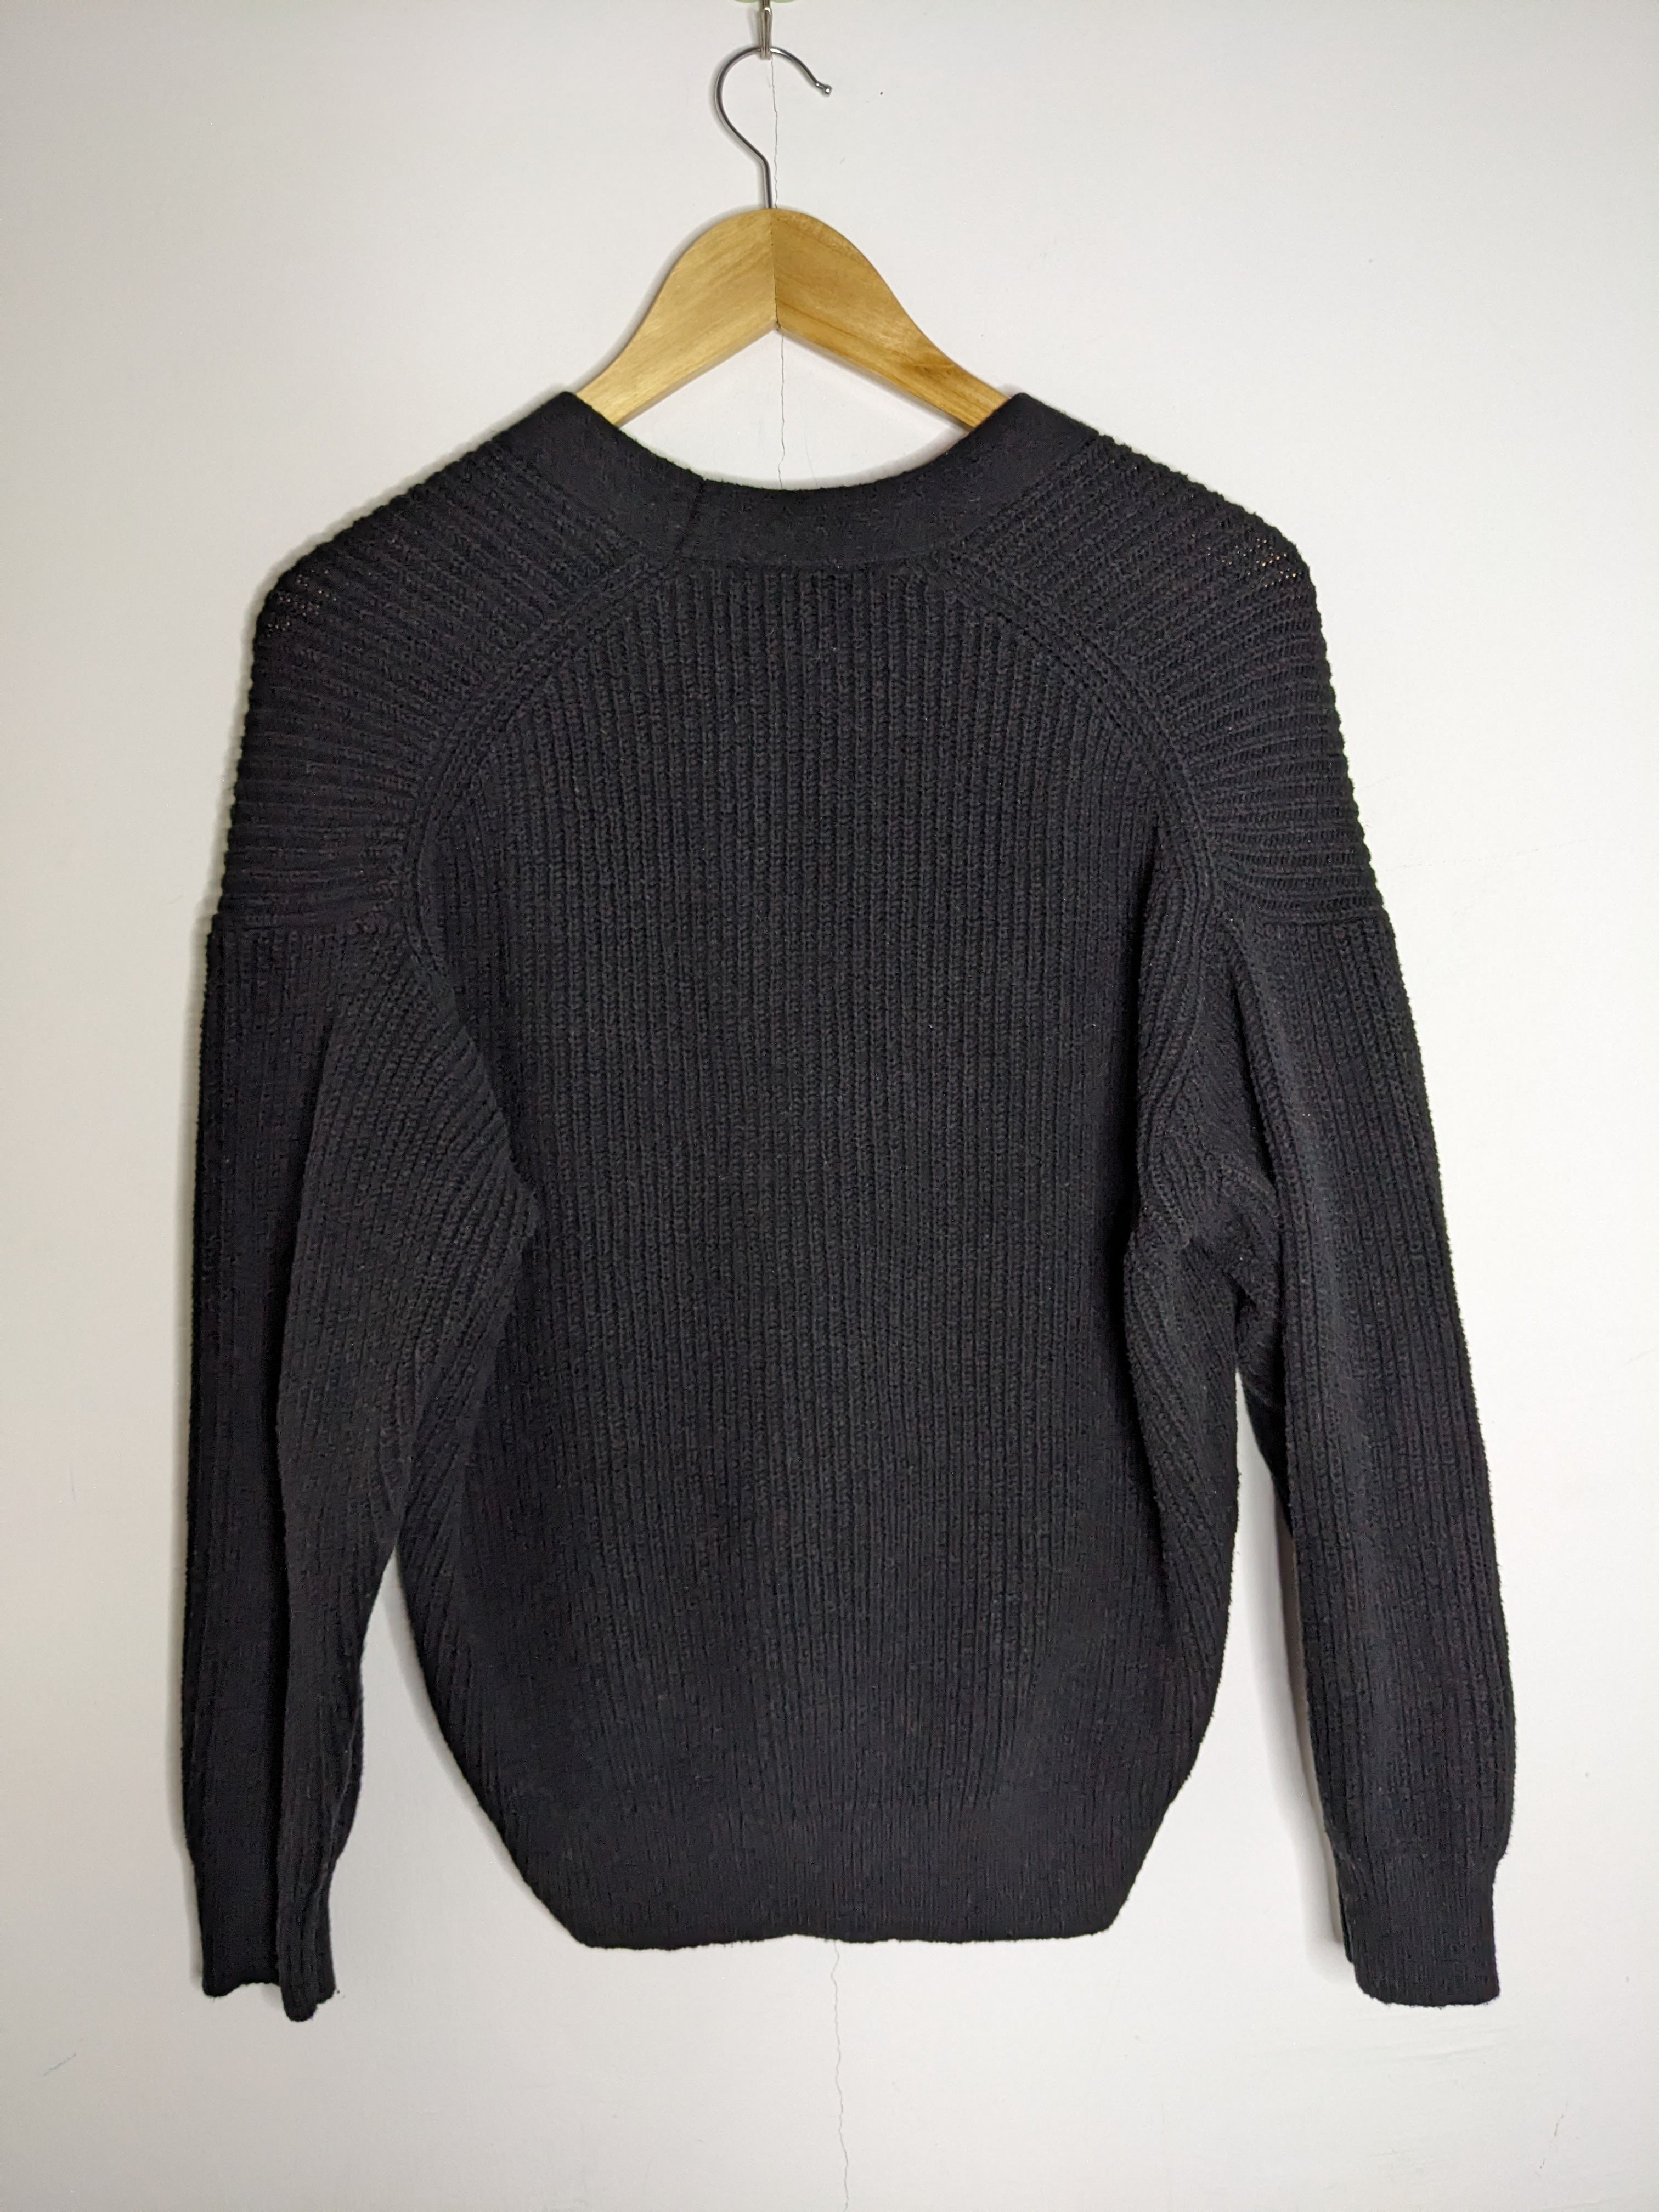 Uniqlo Crocheted Pattern Cotton Knit Sweater Black Cardigan - 3